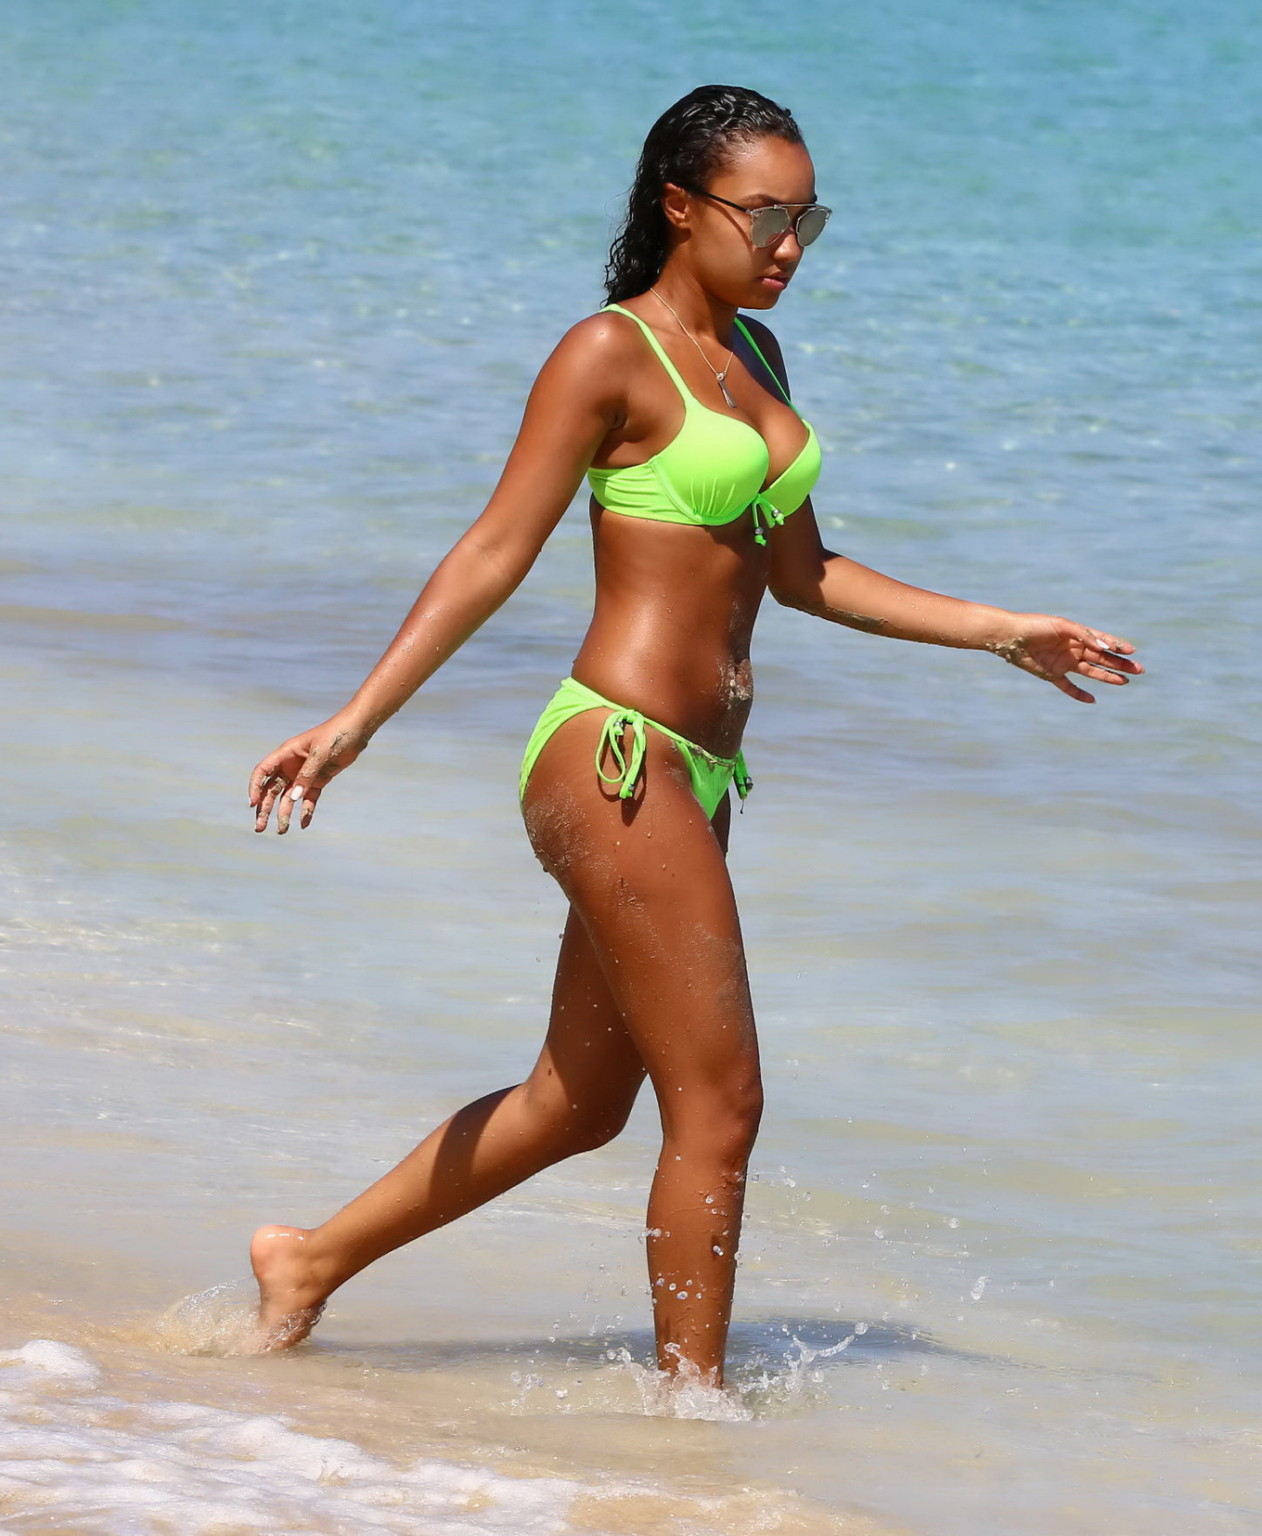 LeighAnne Pinnock busty and booty wearing skimpy green bikini on the beach in Ja #75165883